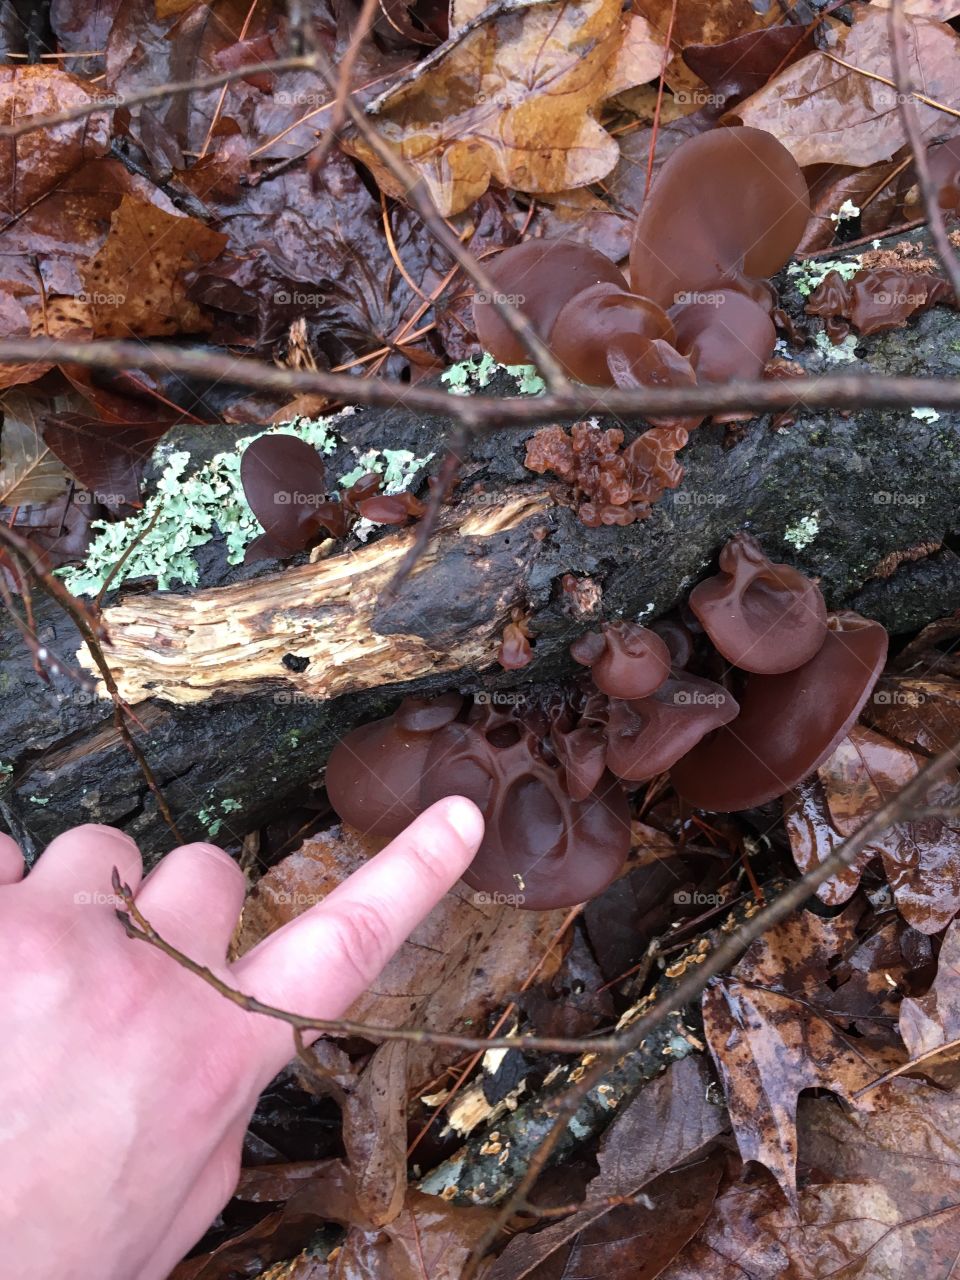 Wood ear fungi 